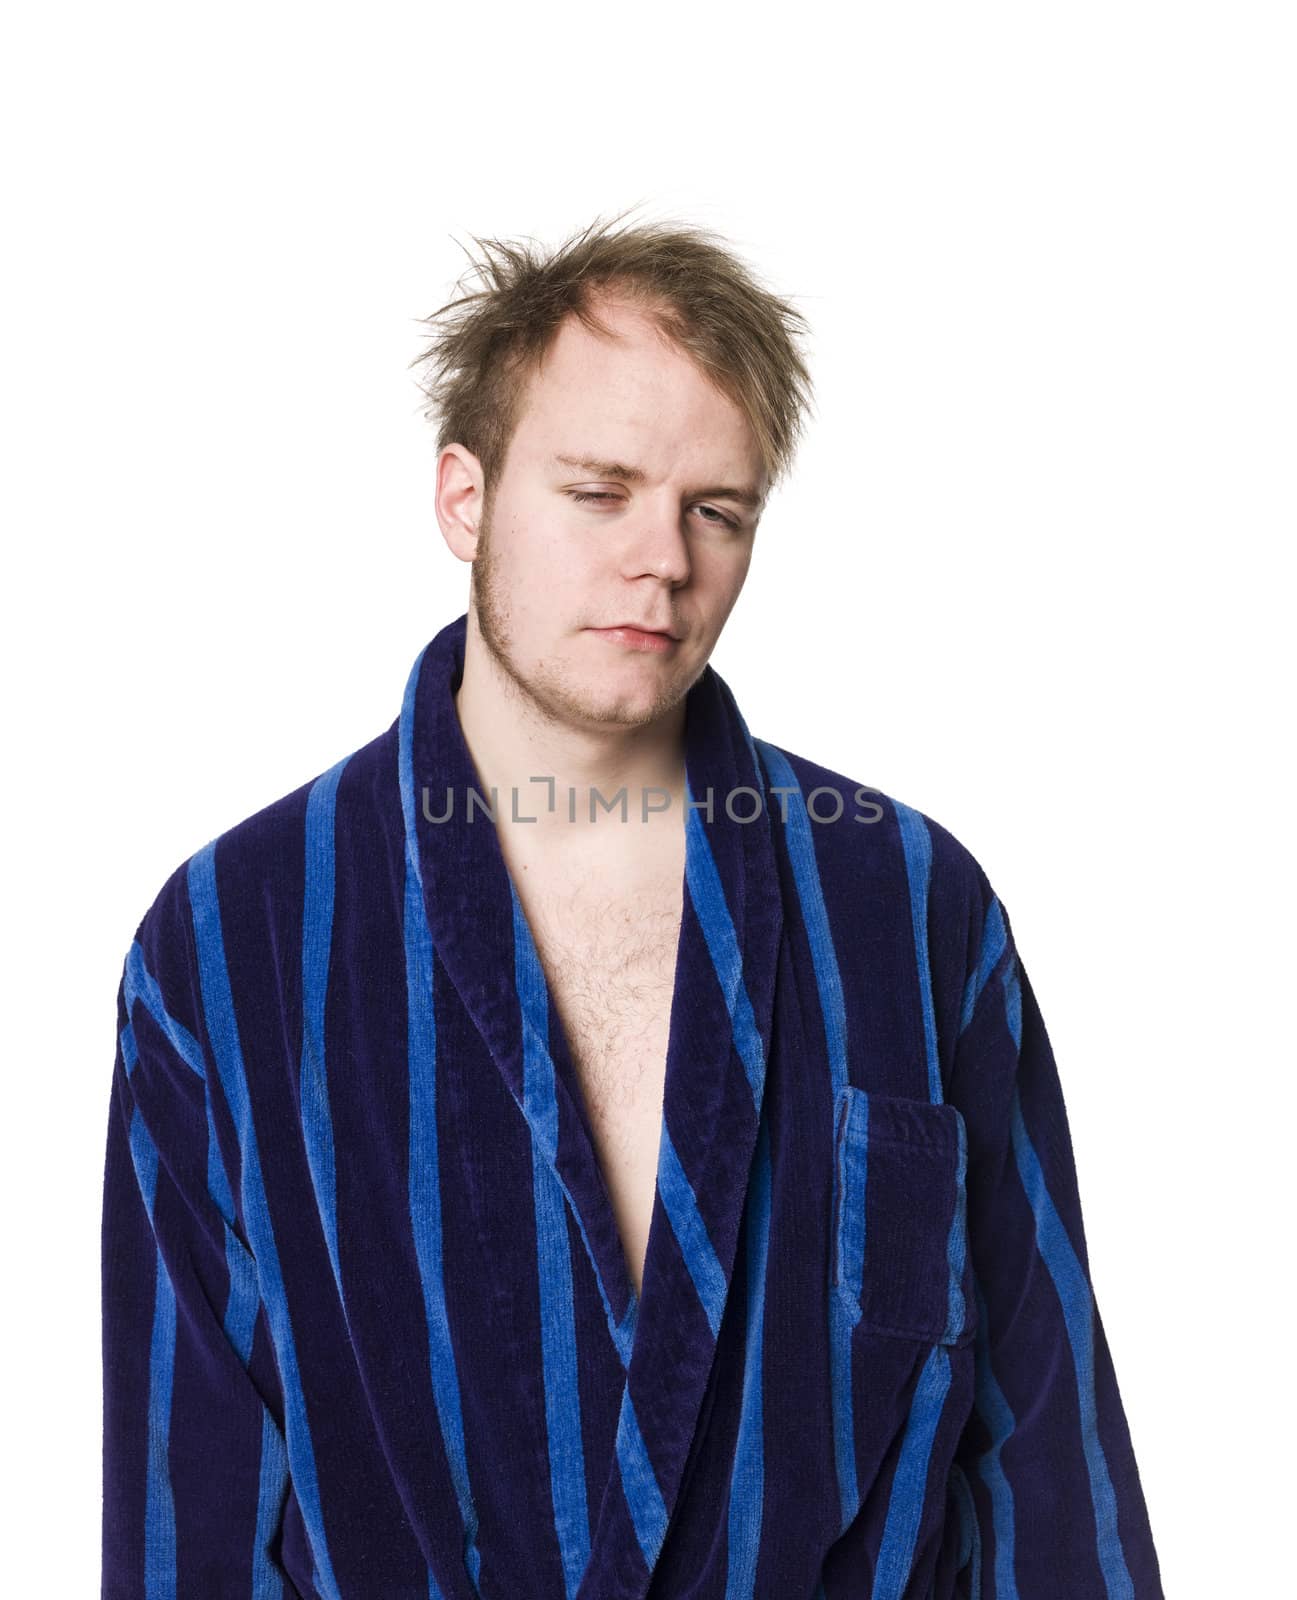 Tiredman in a robe